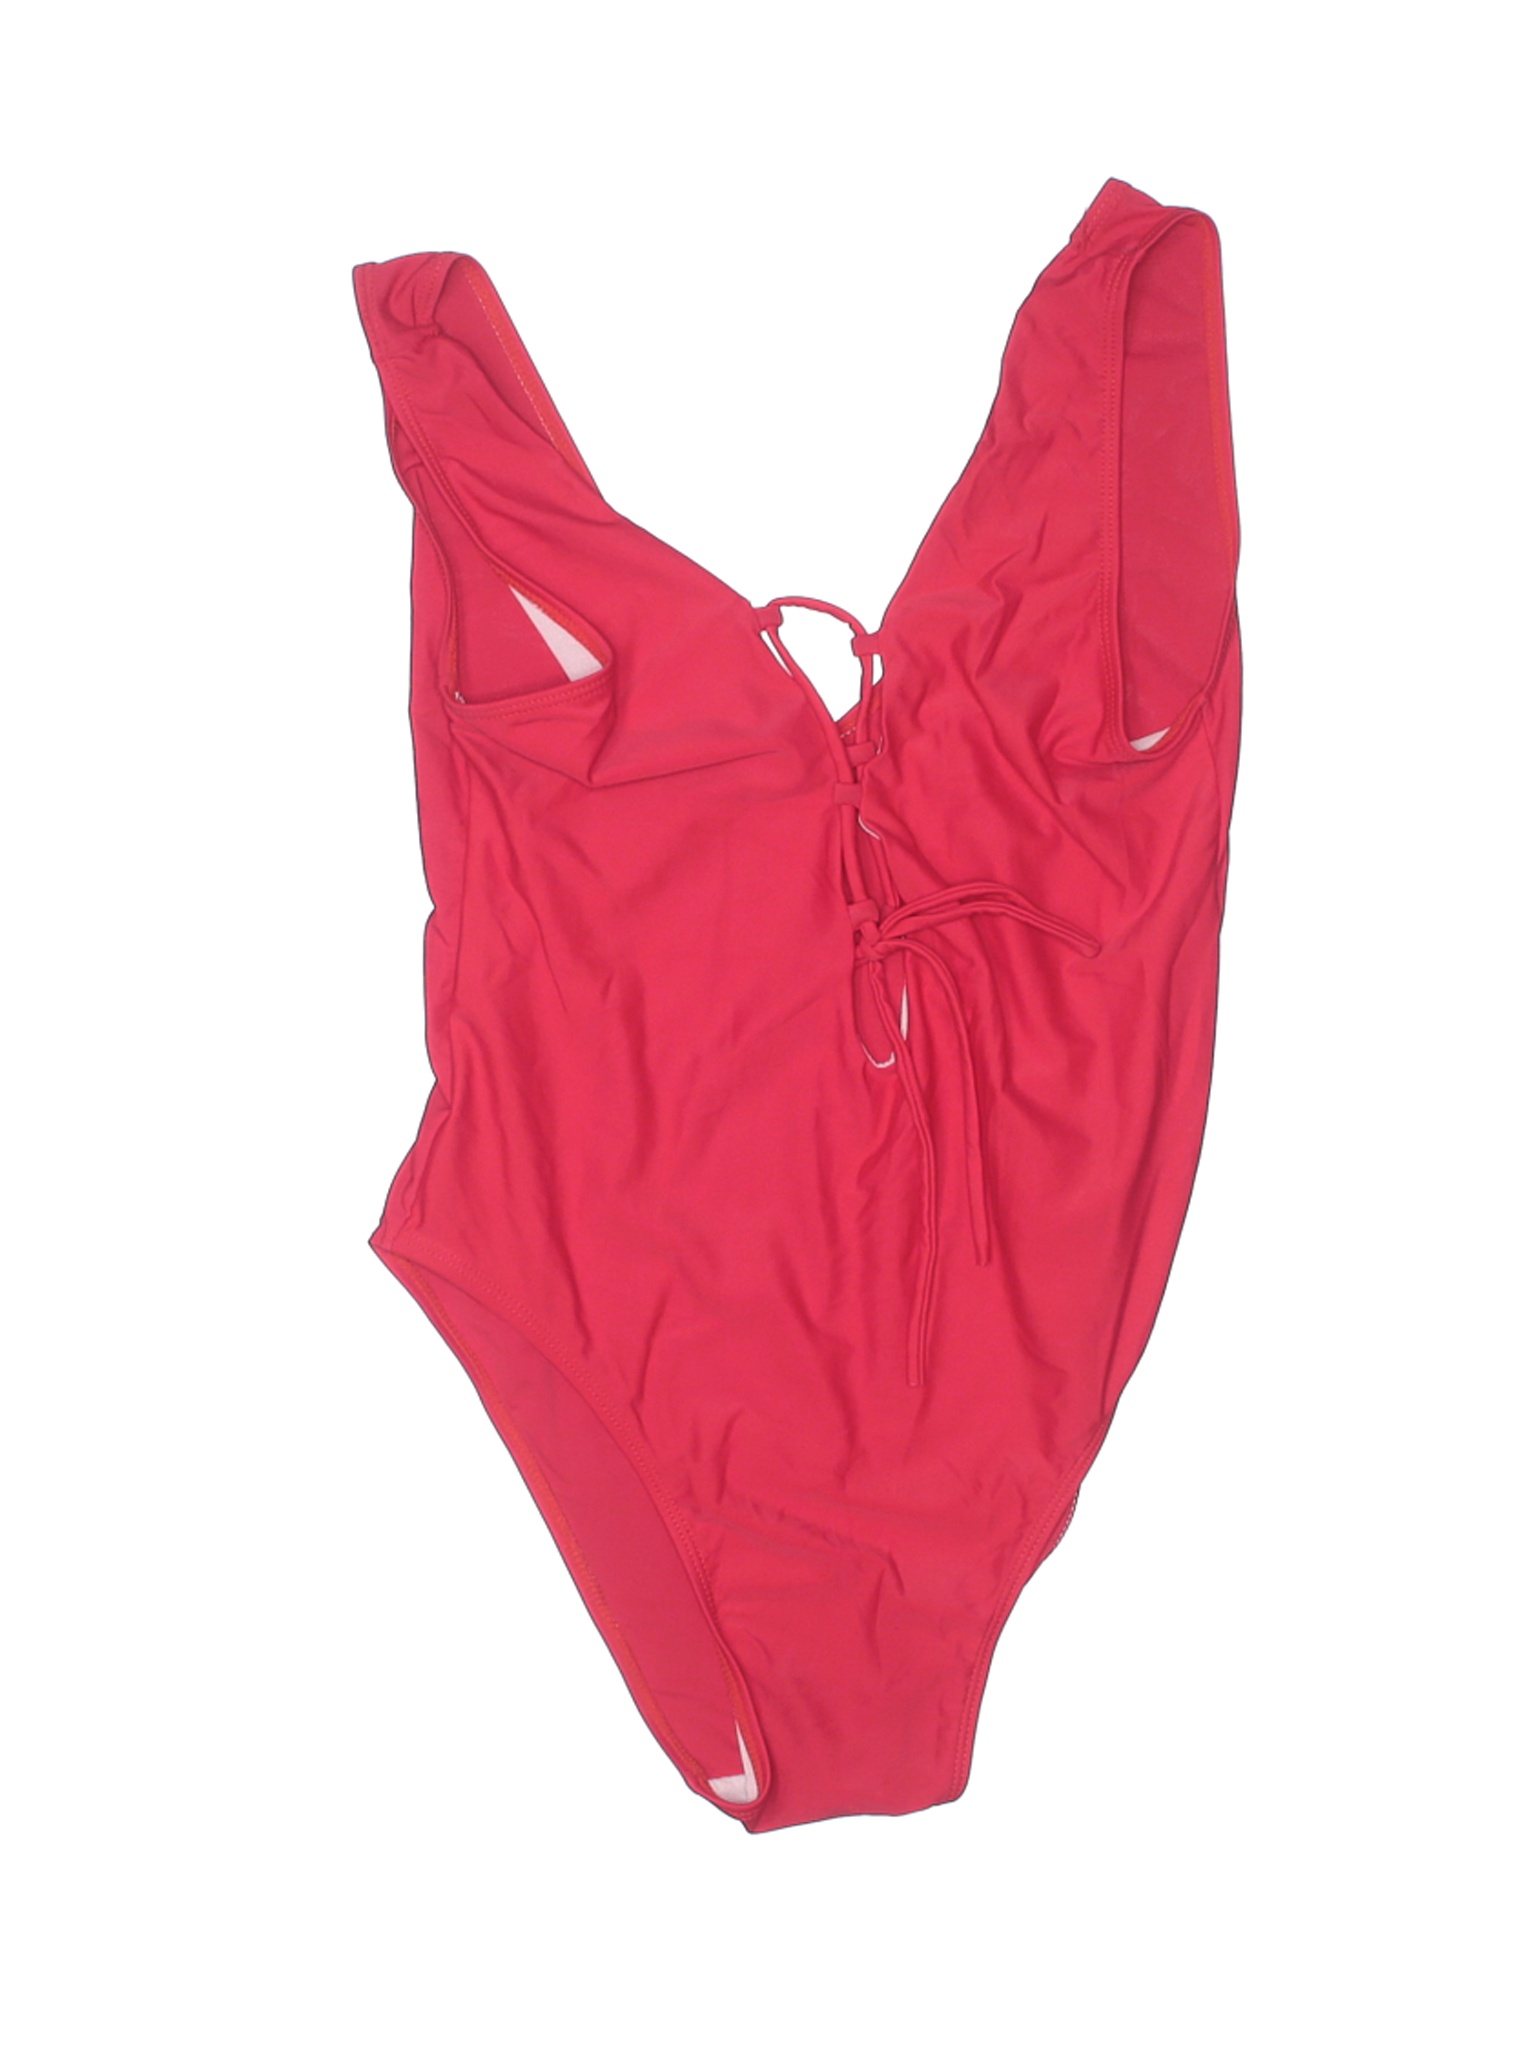 Unbranded Women Red One Piece Swimsuit M | eBay